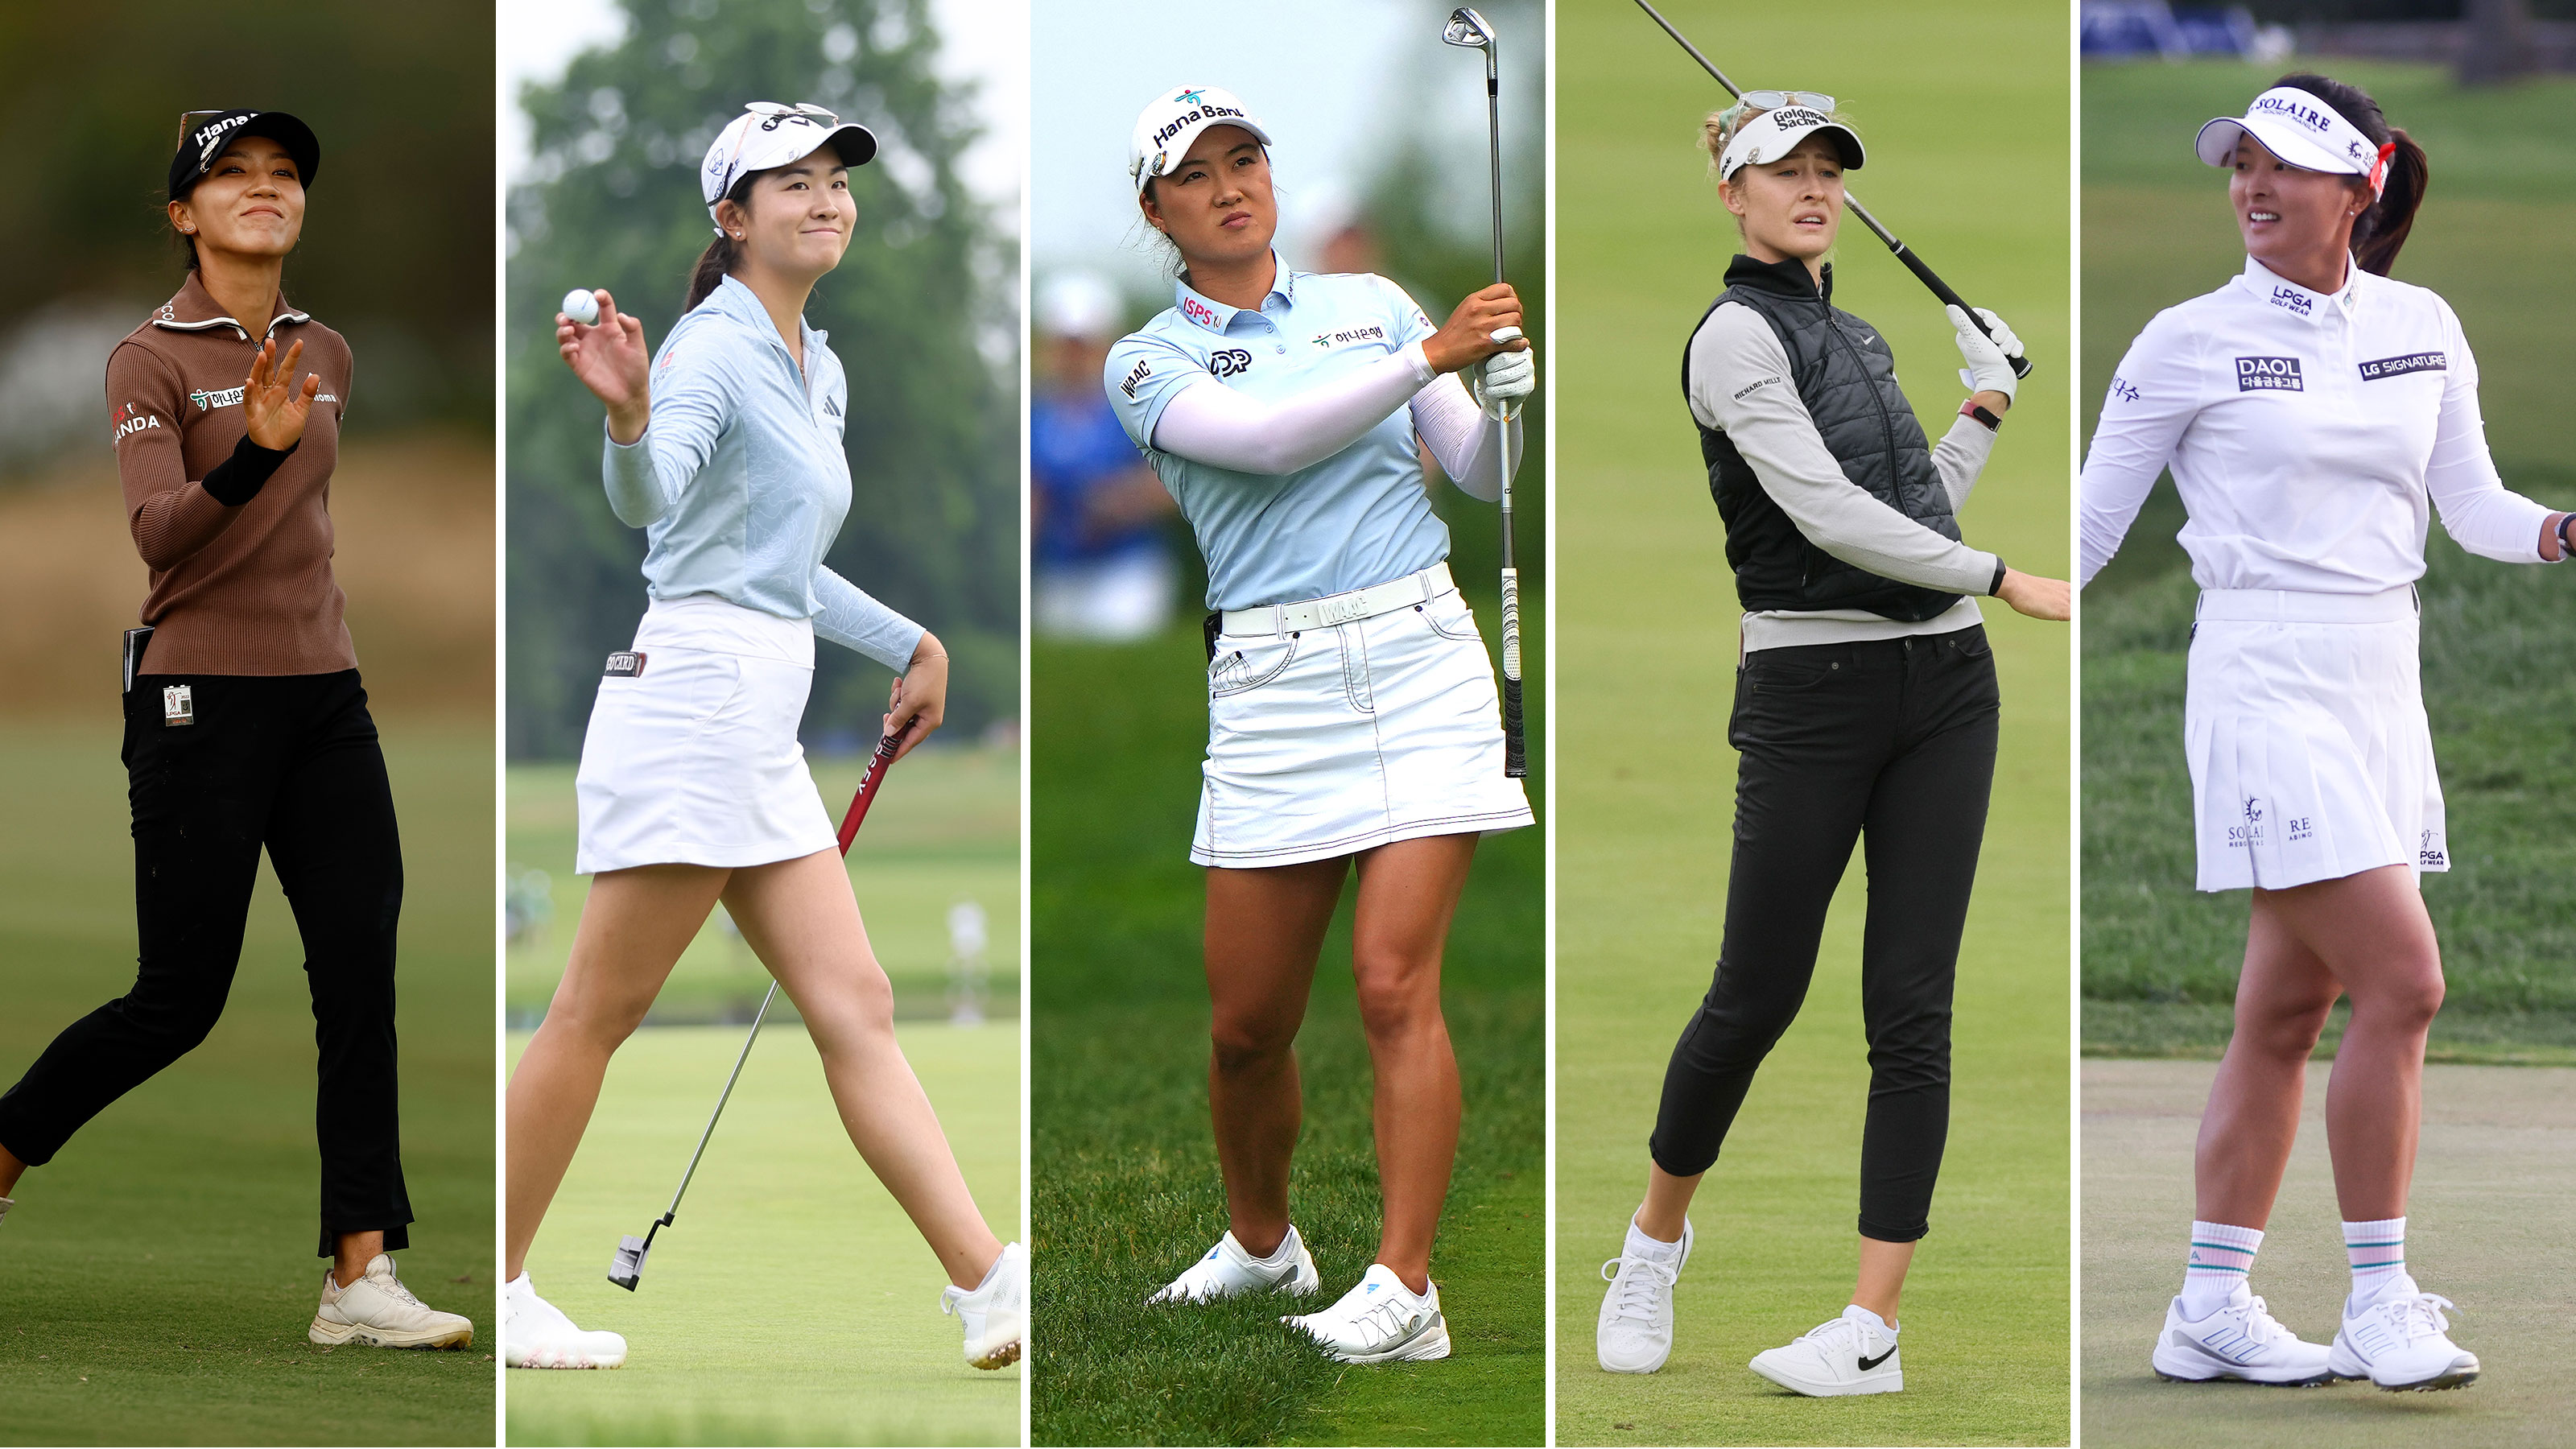 https://www.golfdigest.com/content/dam/images/golfdigest/fullset/2023/7/us-womens-open-2023-players-ranking-image-collage.jpg